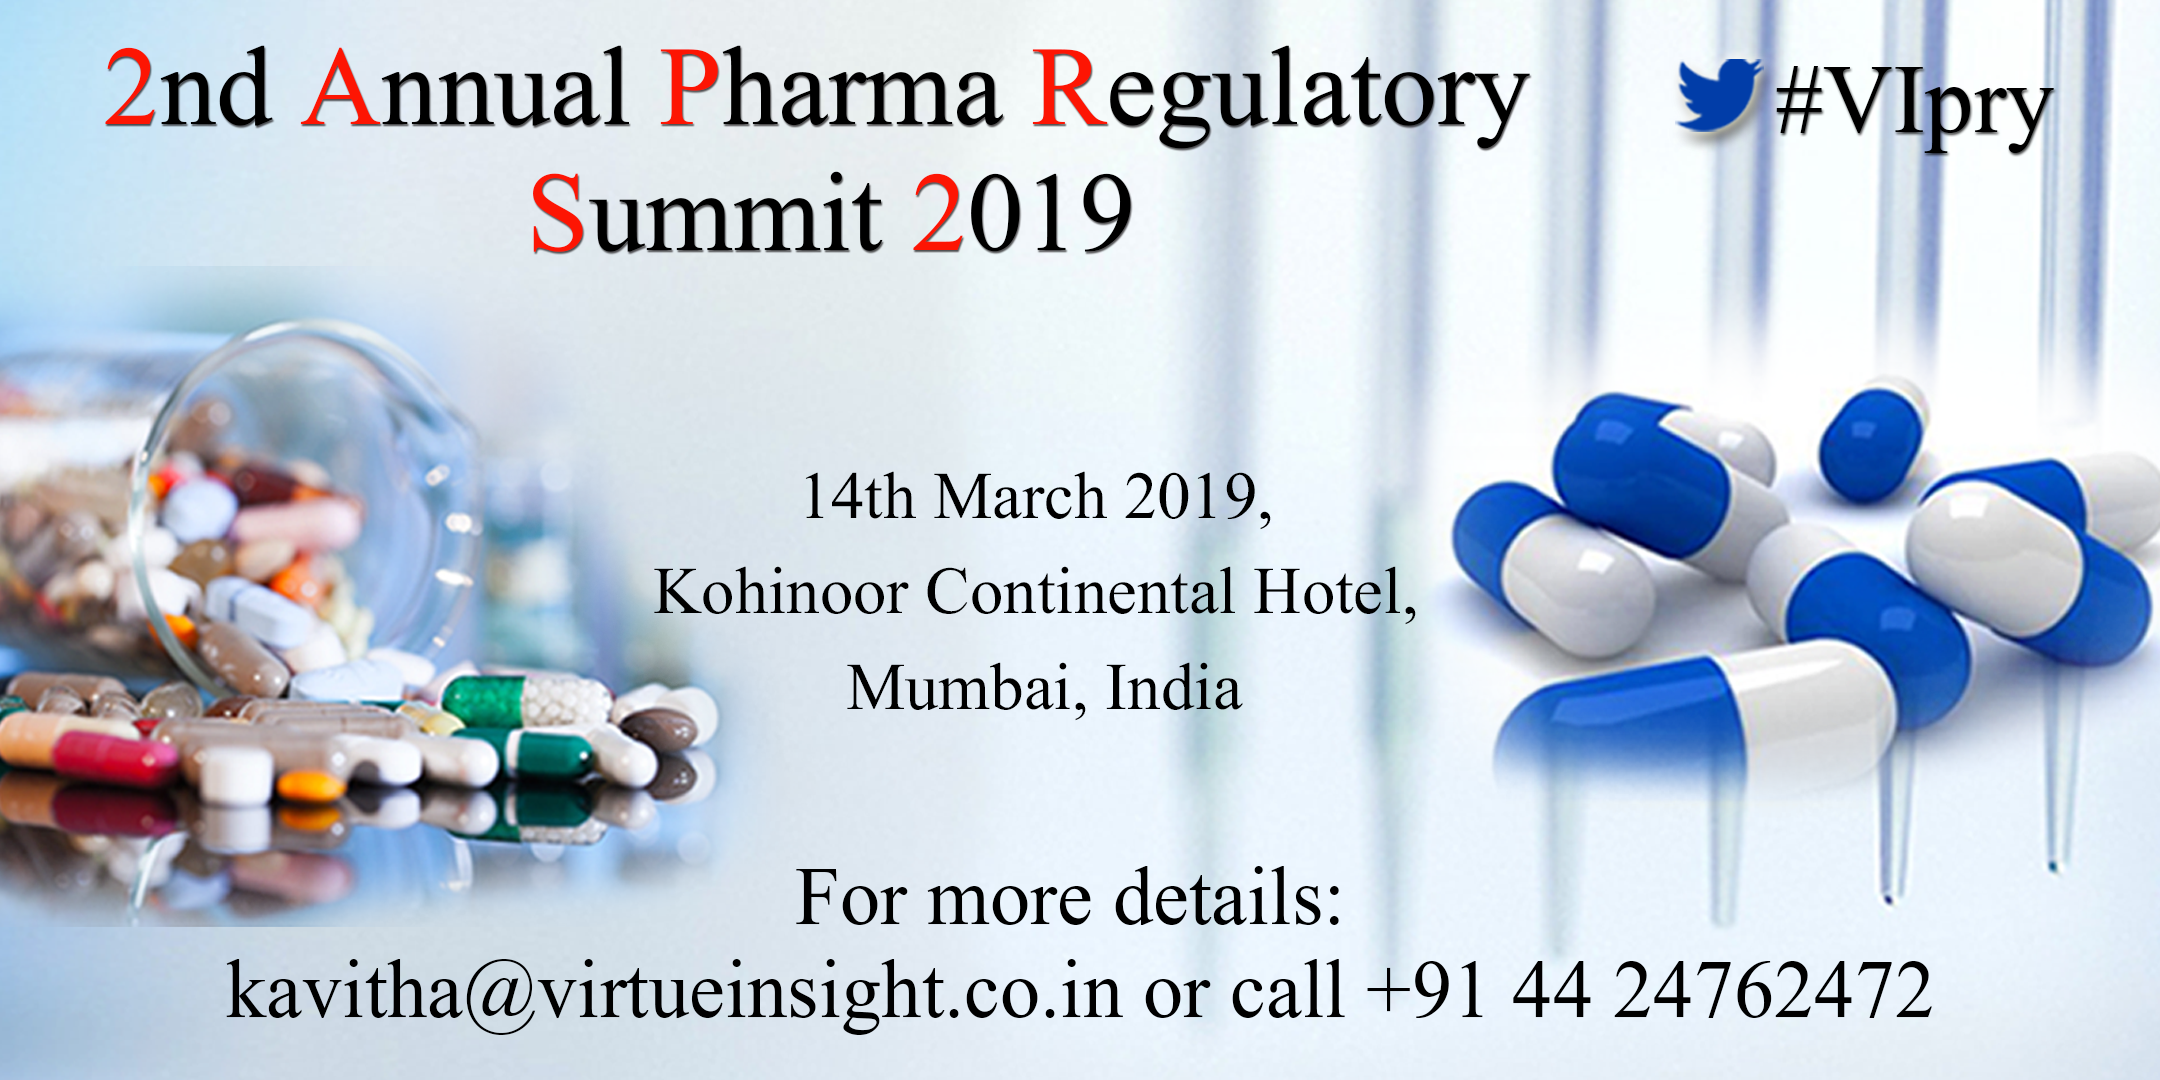 2nd Annual Pharma Regulatory Summit 2019, Mumbai, Maharashtra, India